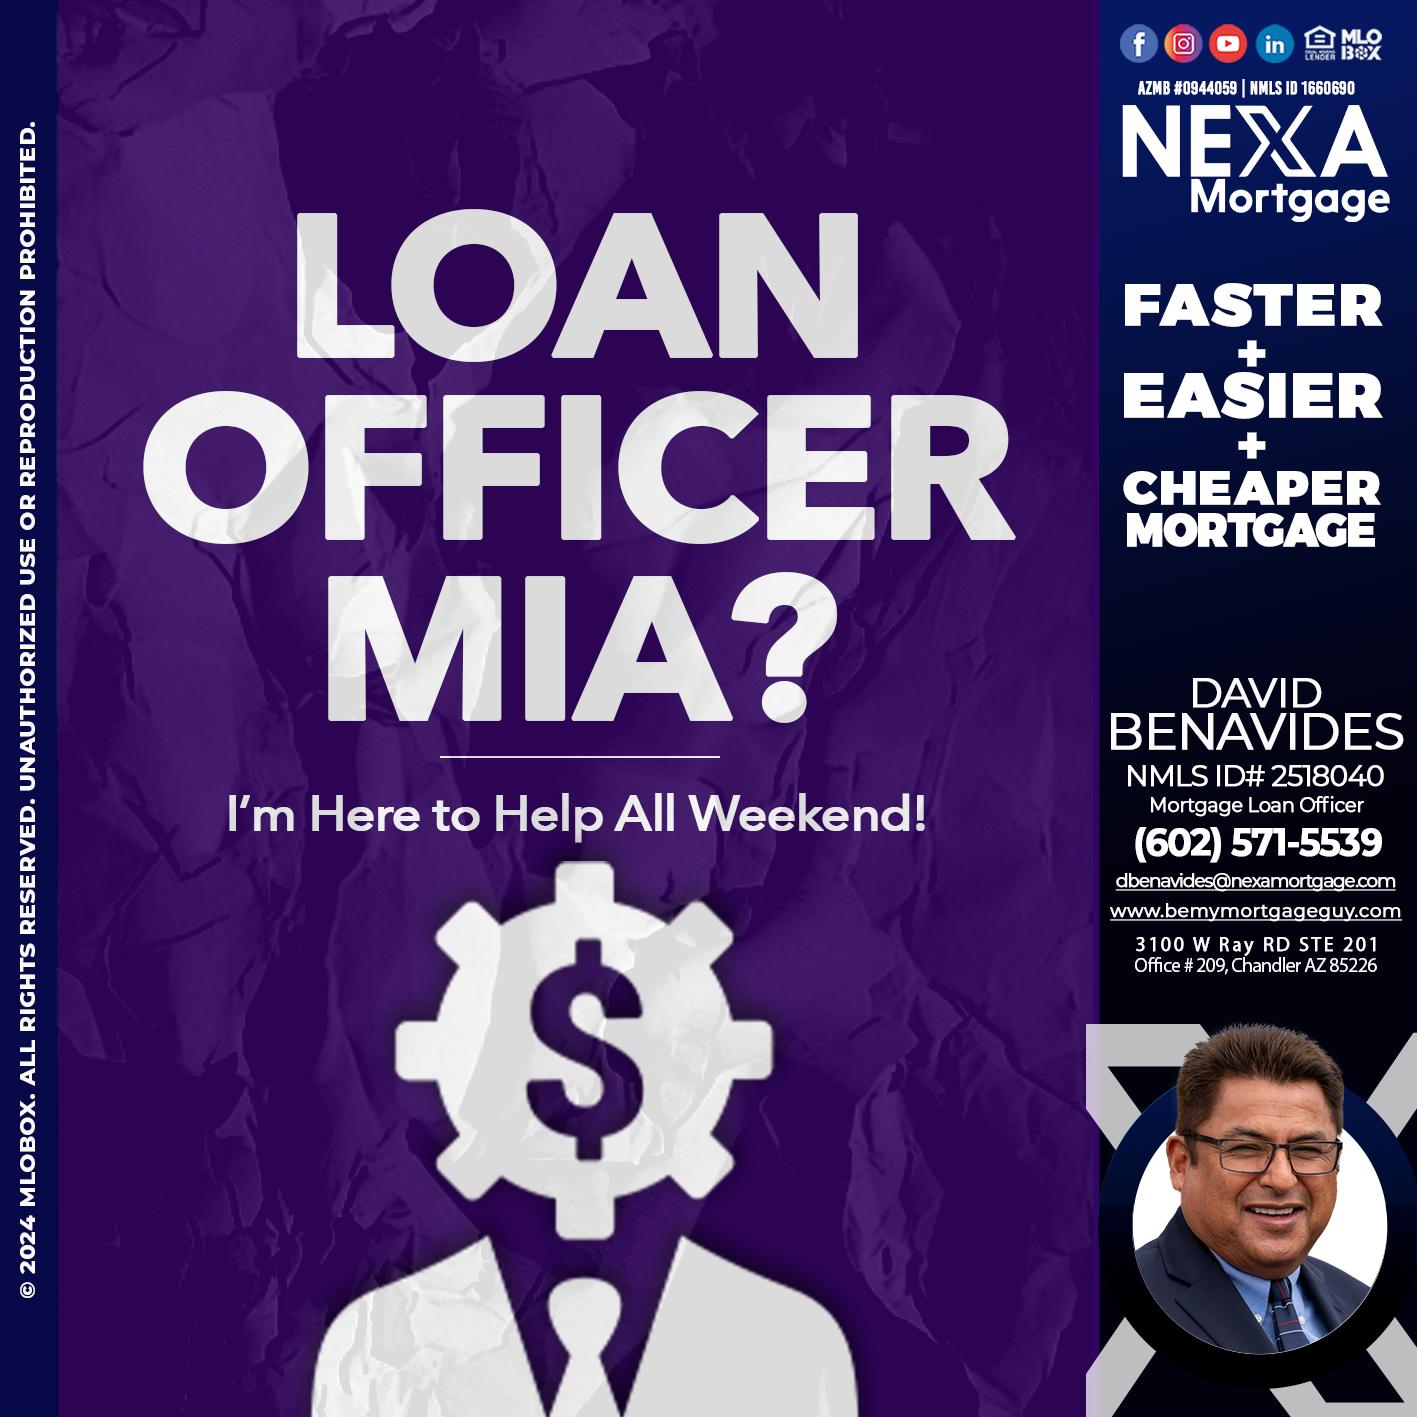 LOAN OFFICER - David Benavides -Mortgage Loan Officer